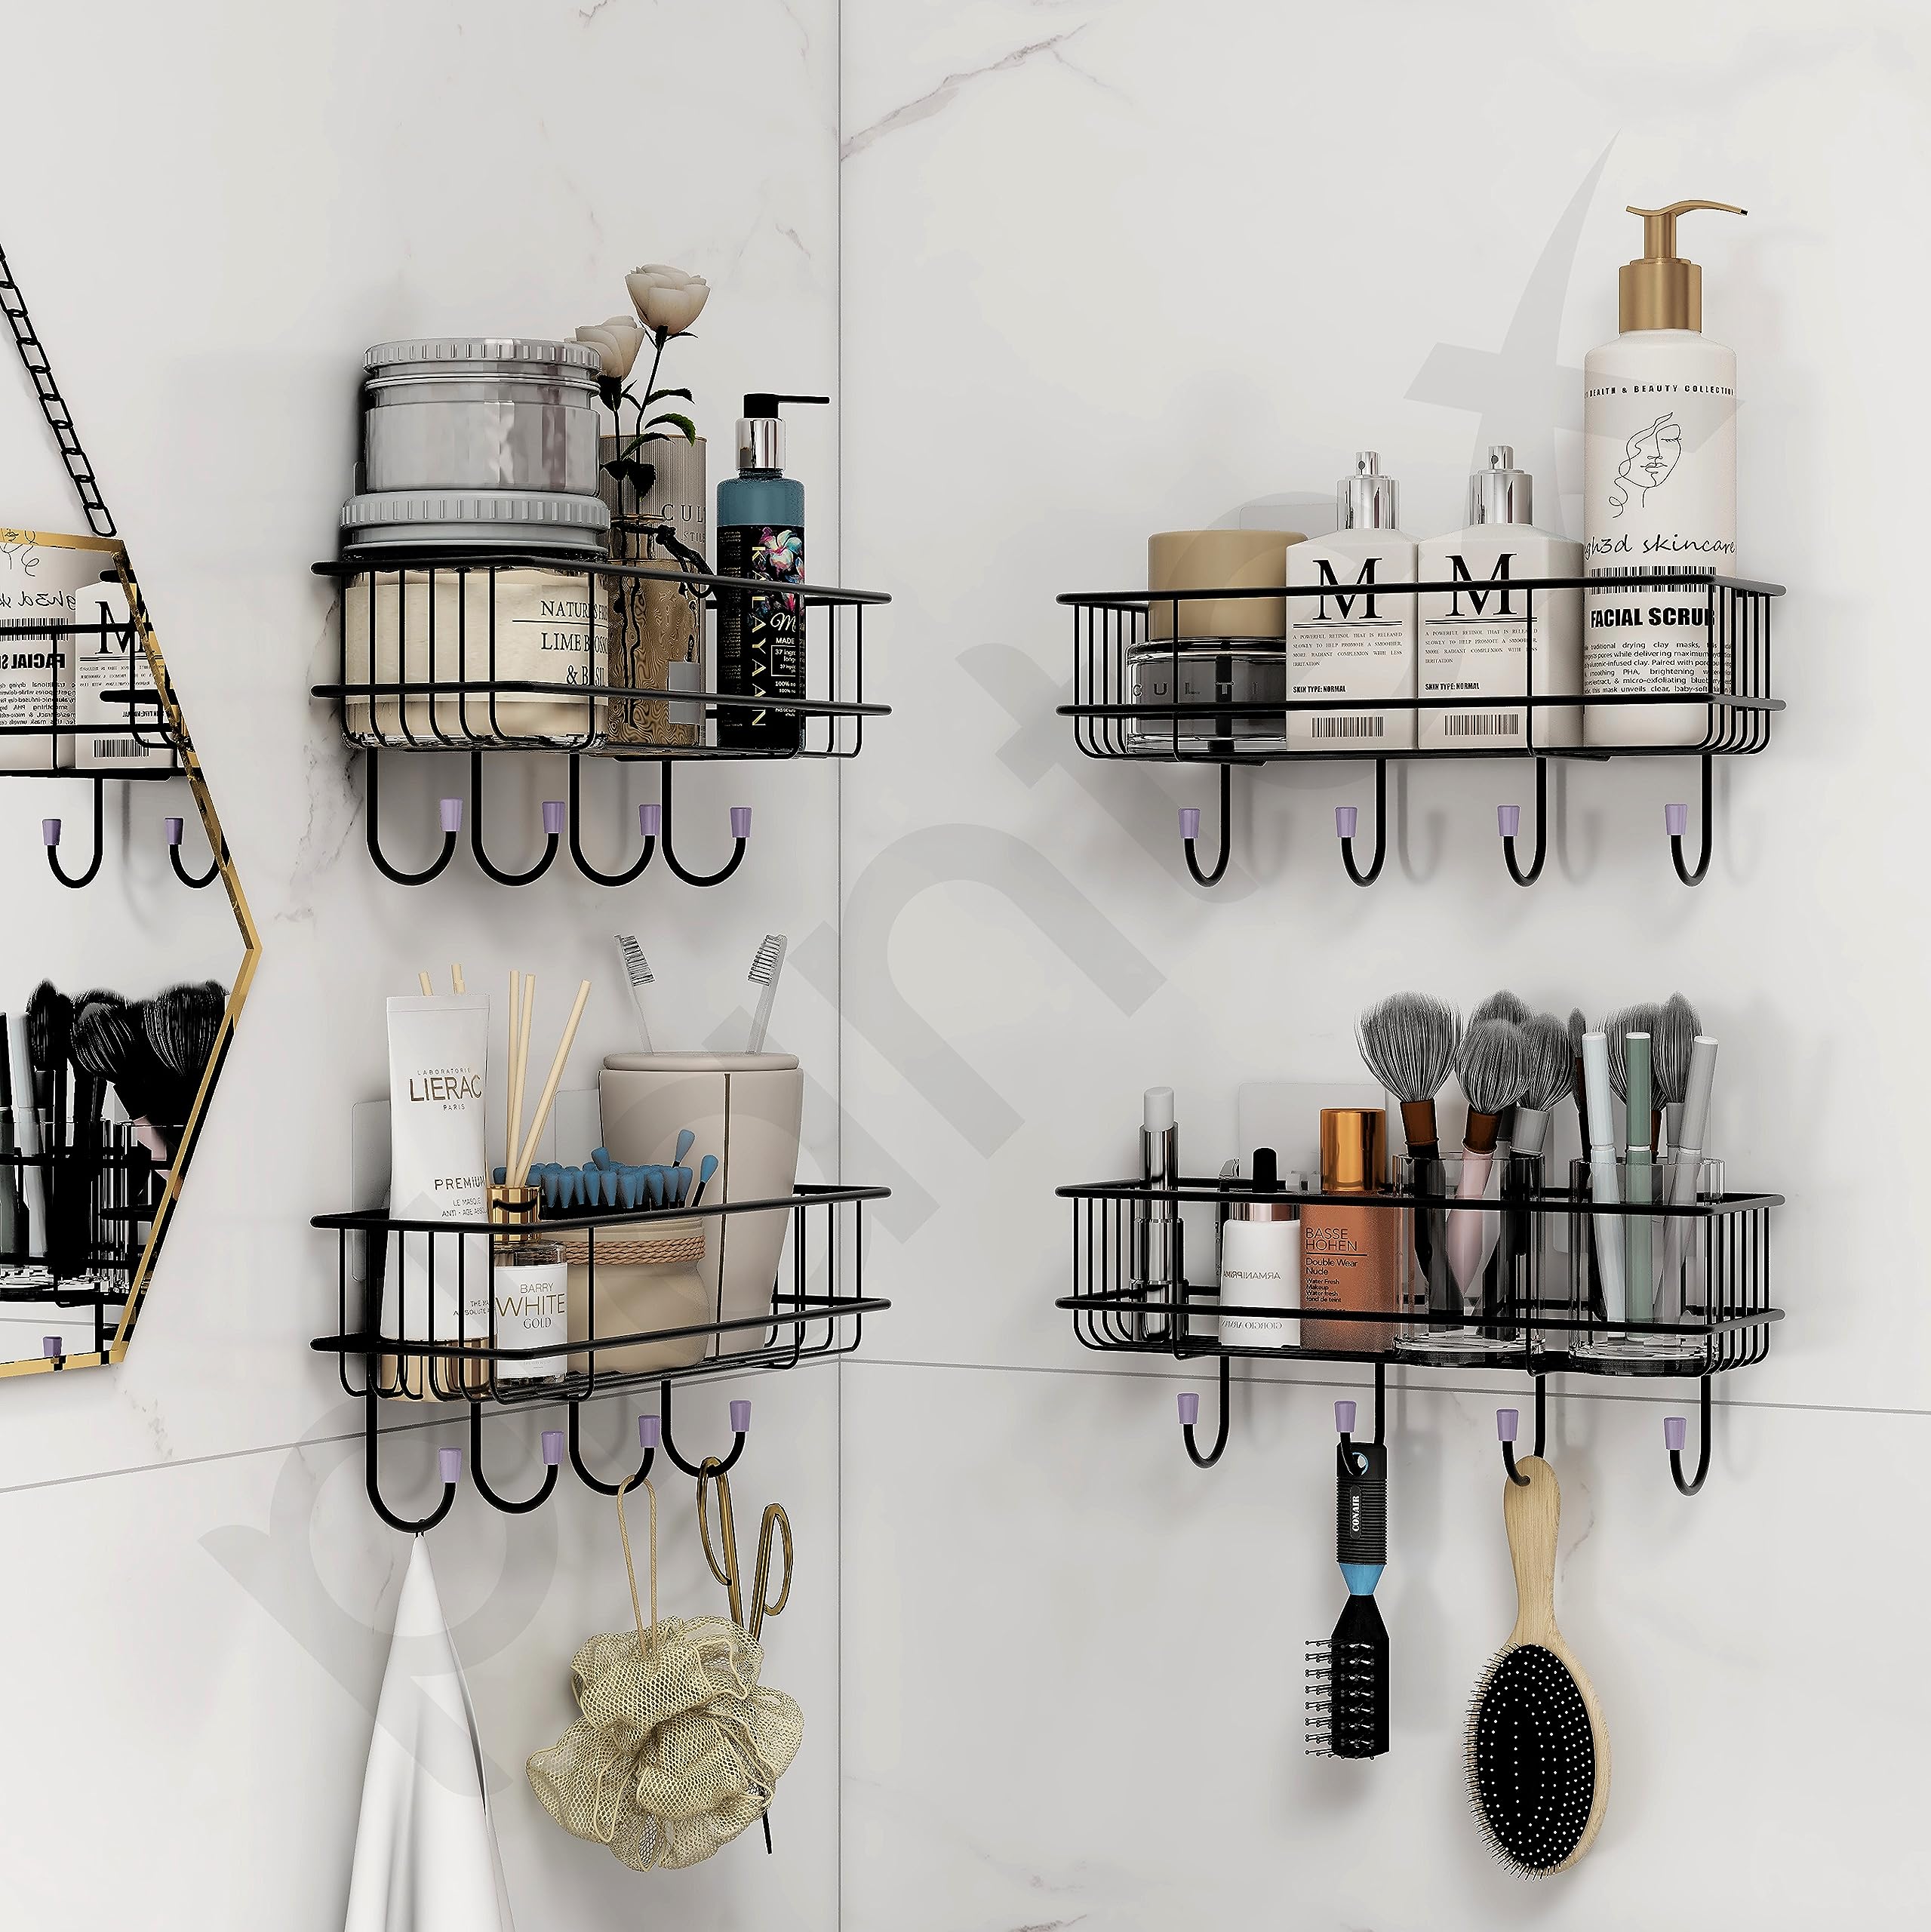 Plantex GI Steel Self-Adhesive Multipurpose Bathroom Shelf with Hooks/Towel Holder/Rack/Bathroom Accessories - Wall Mount - Pack of 4 (Black,Powder Coated)